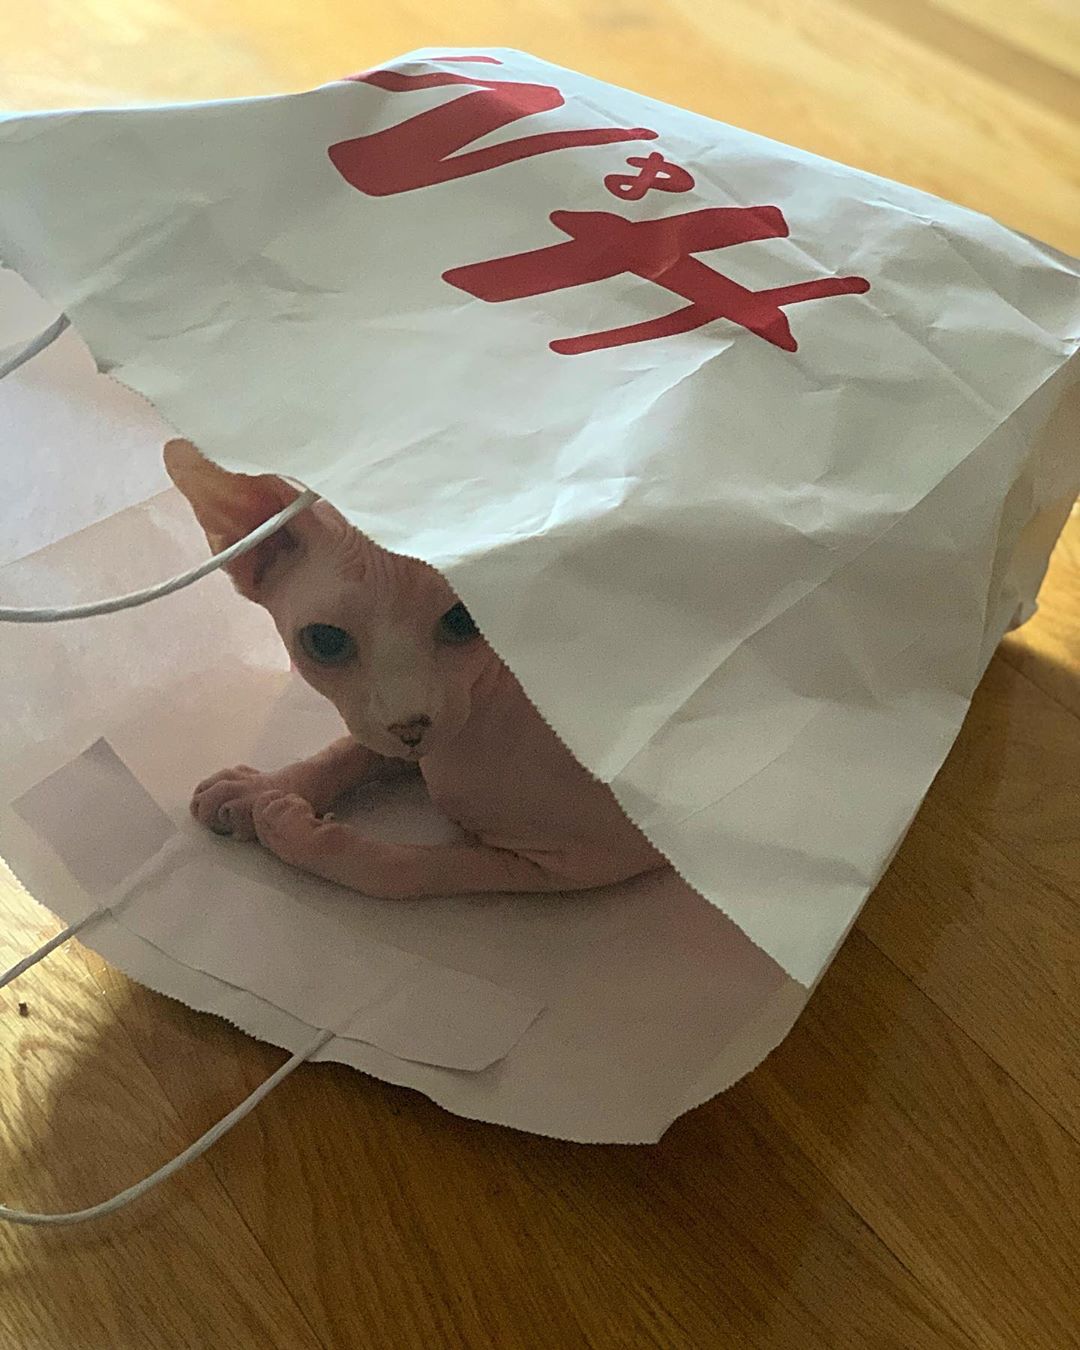 Sphynx Cat inside an H&M paper bag